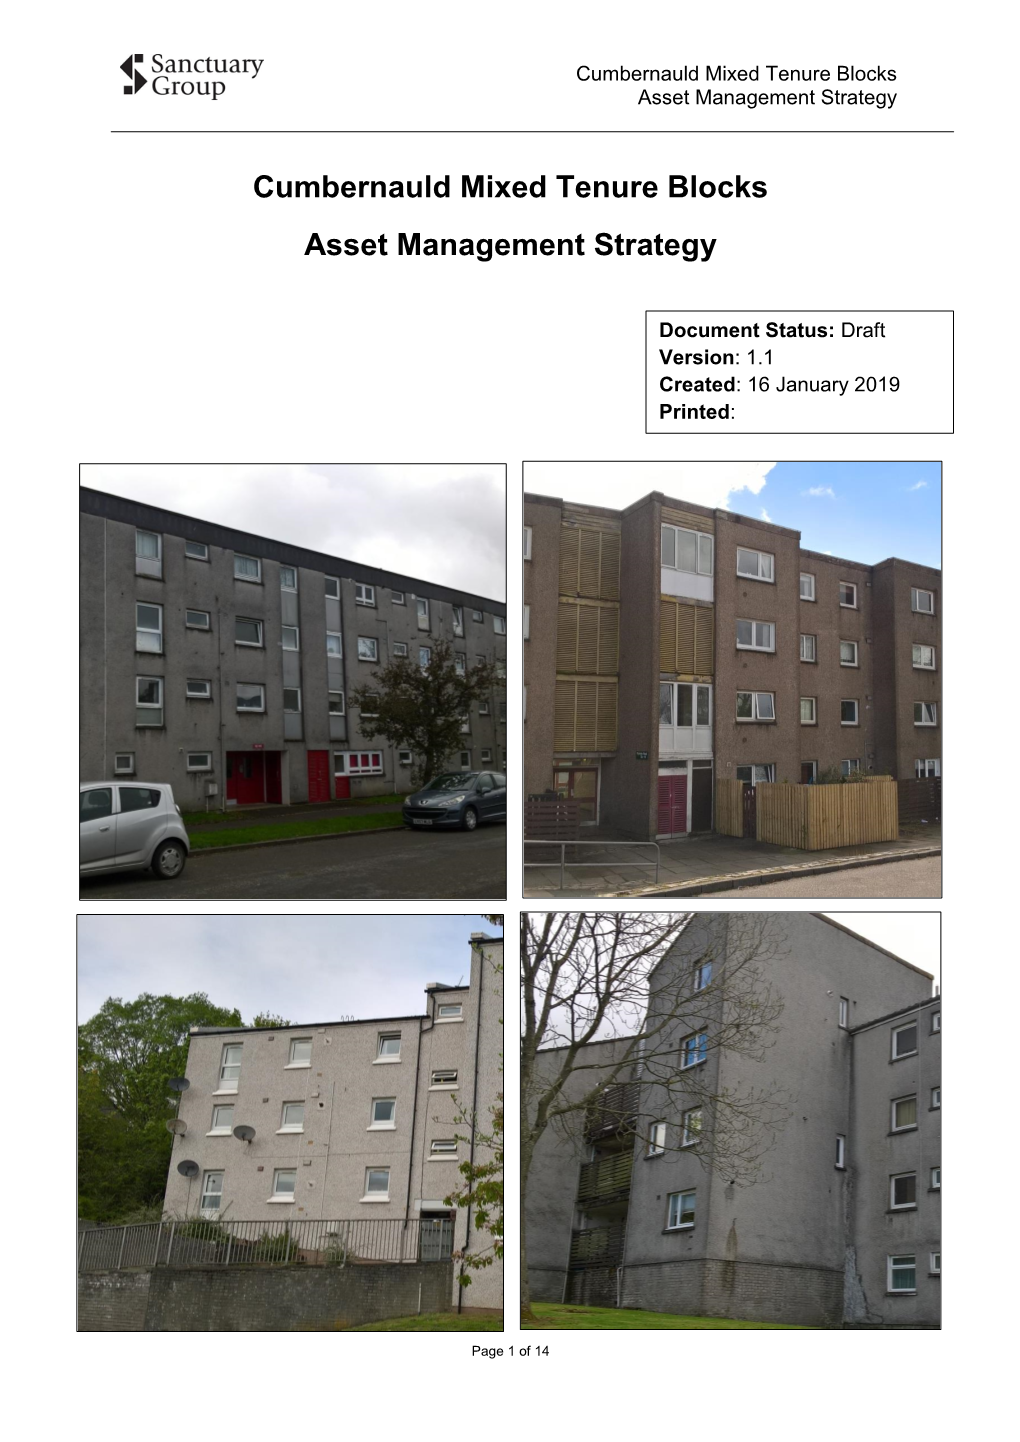 Cumbernauld Mixed Tenure Blocks Asset Management Strategy